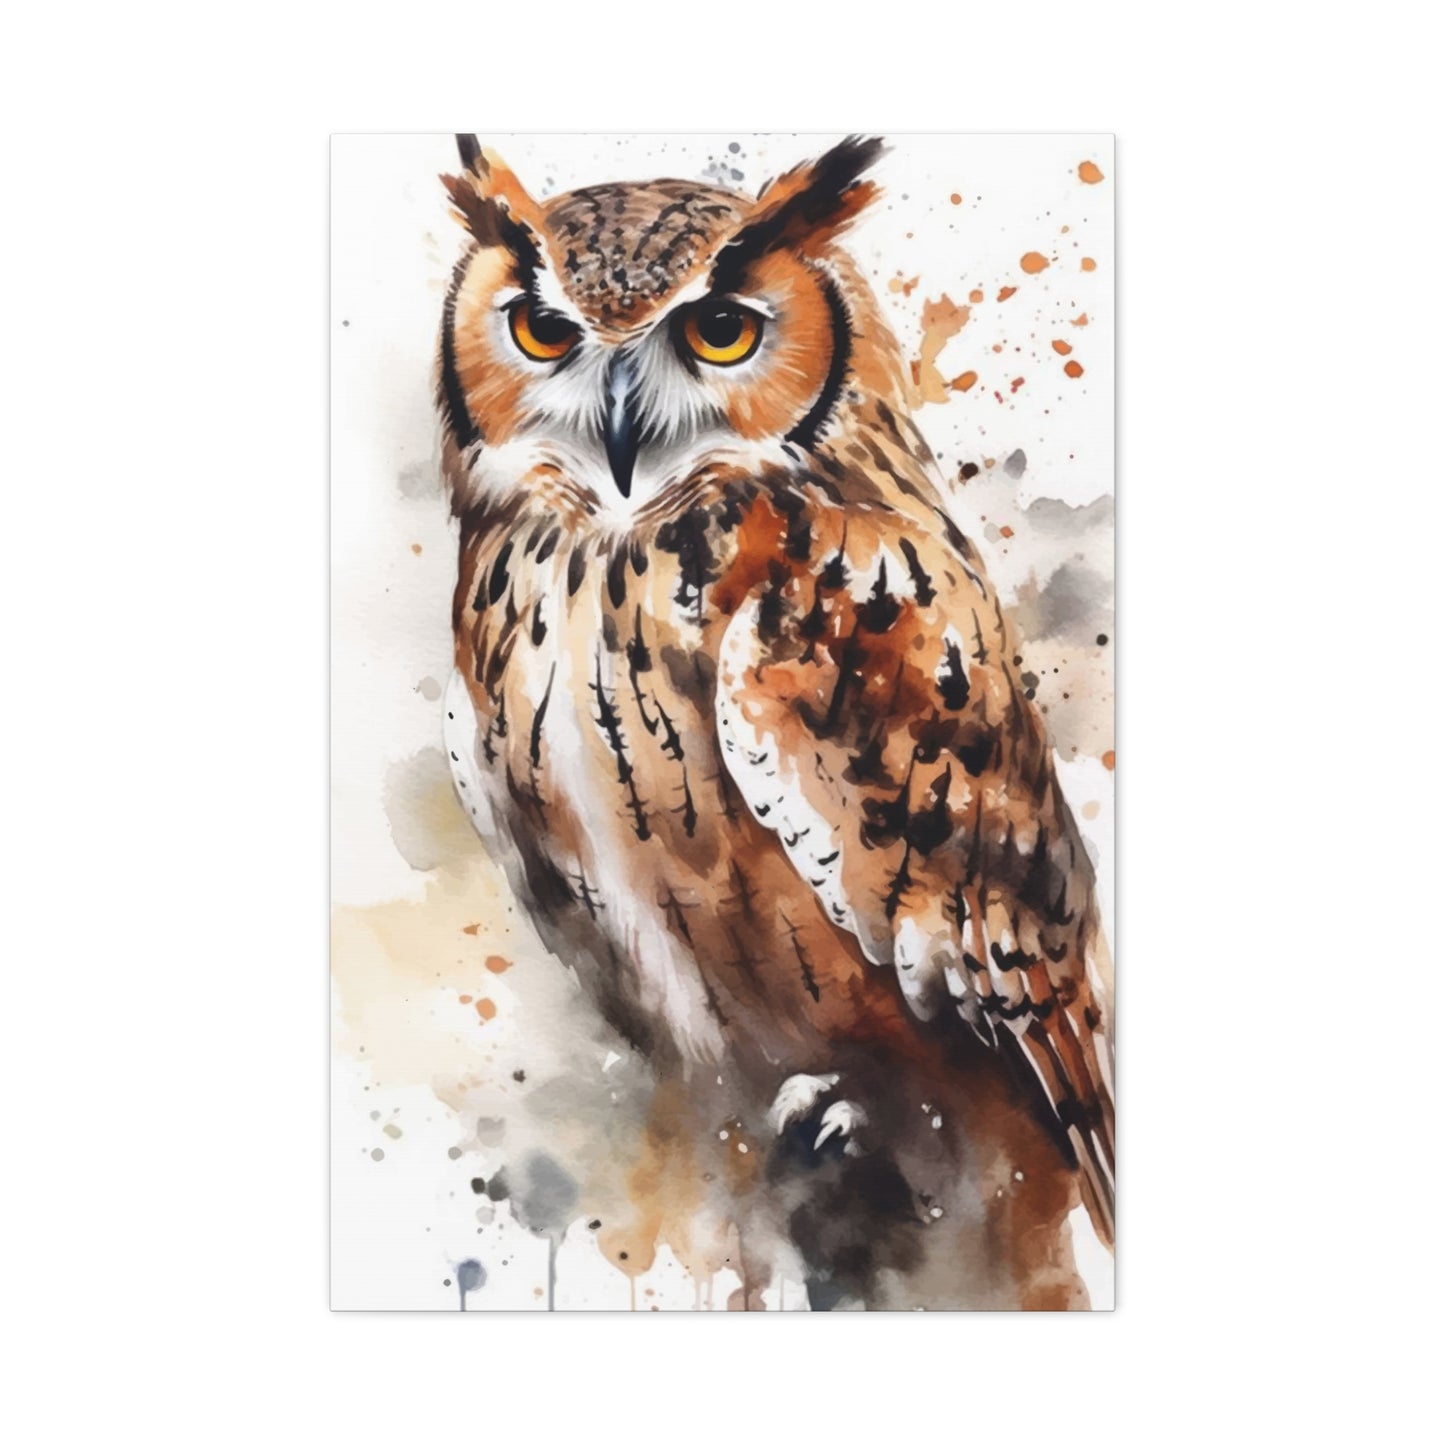 Brown Owl Wall Art & Canvas Prints